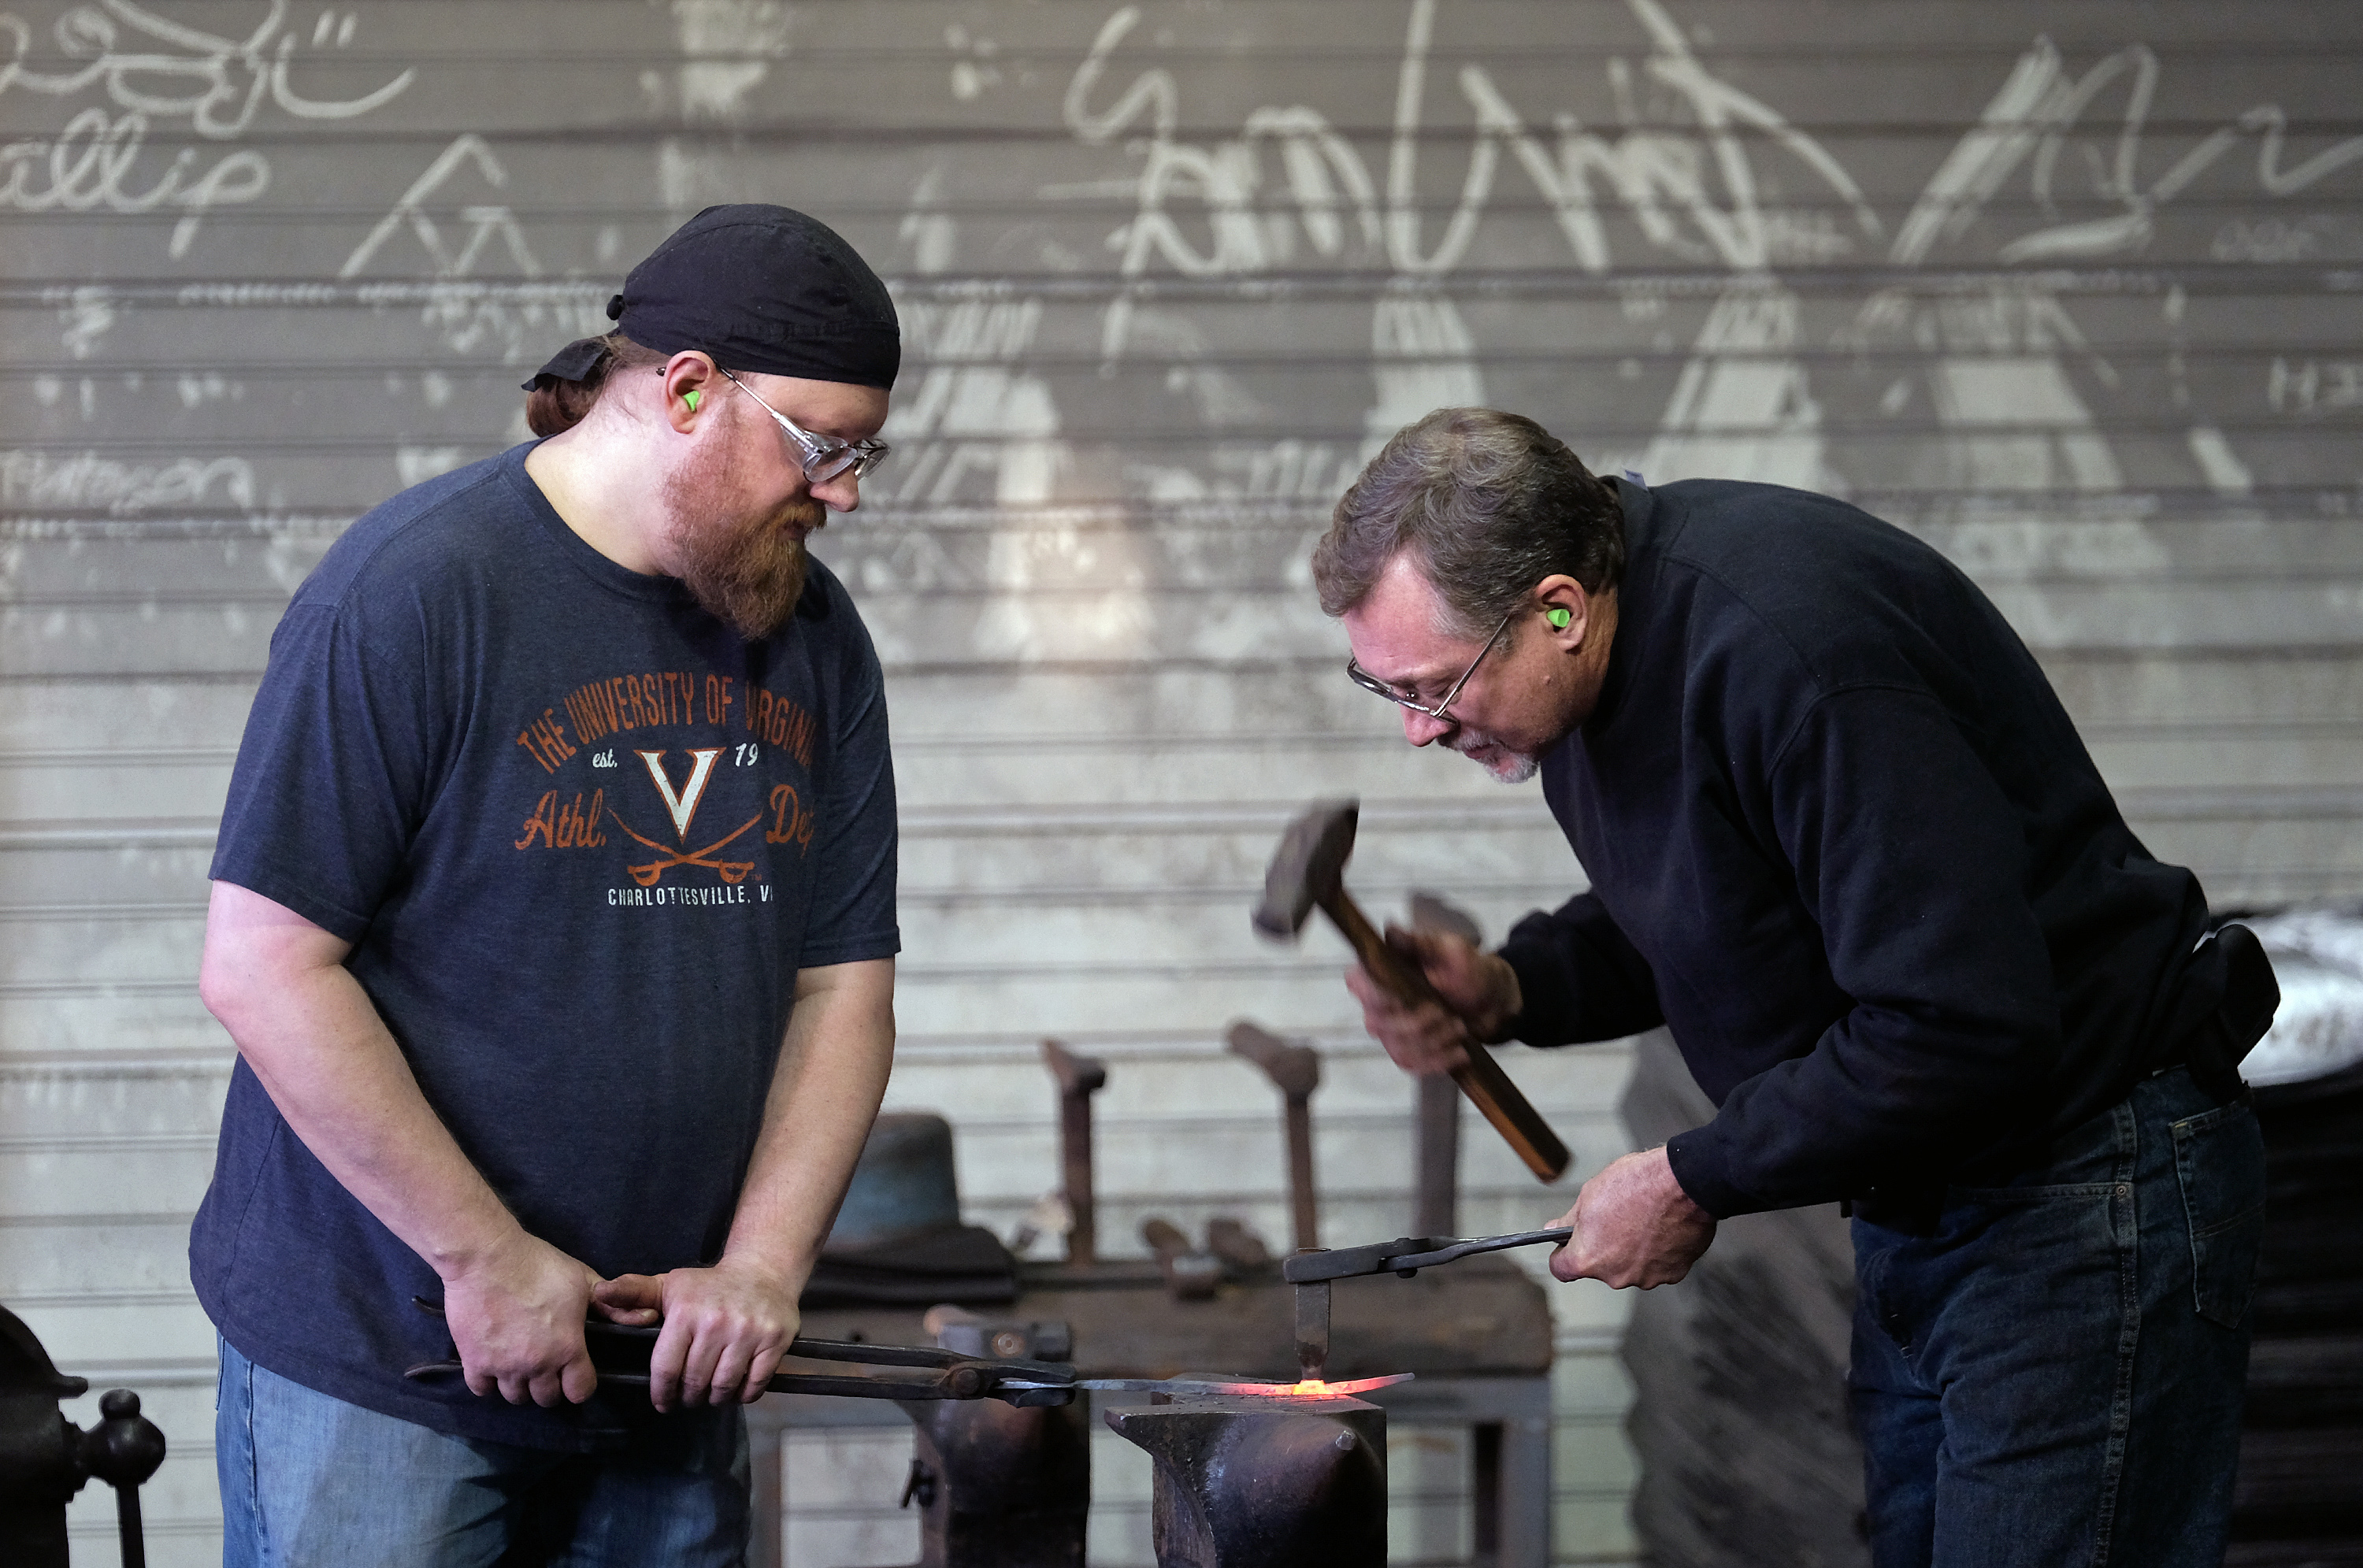 The lost art of blacksmithing: A look into Waynesboro's blacksmithing  institute